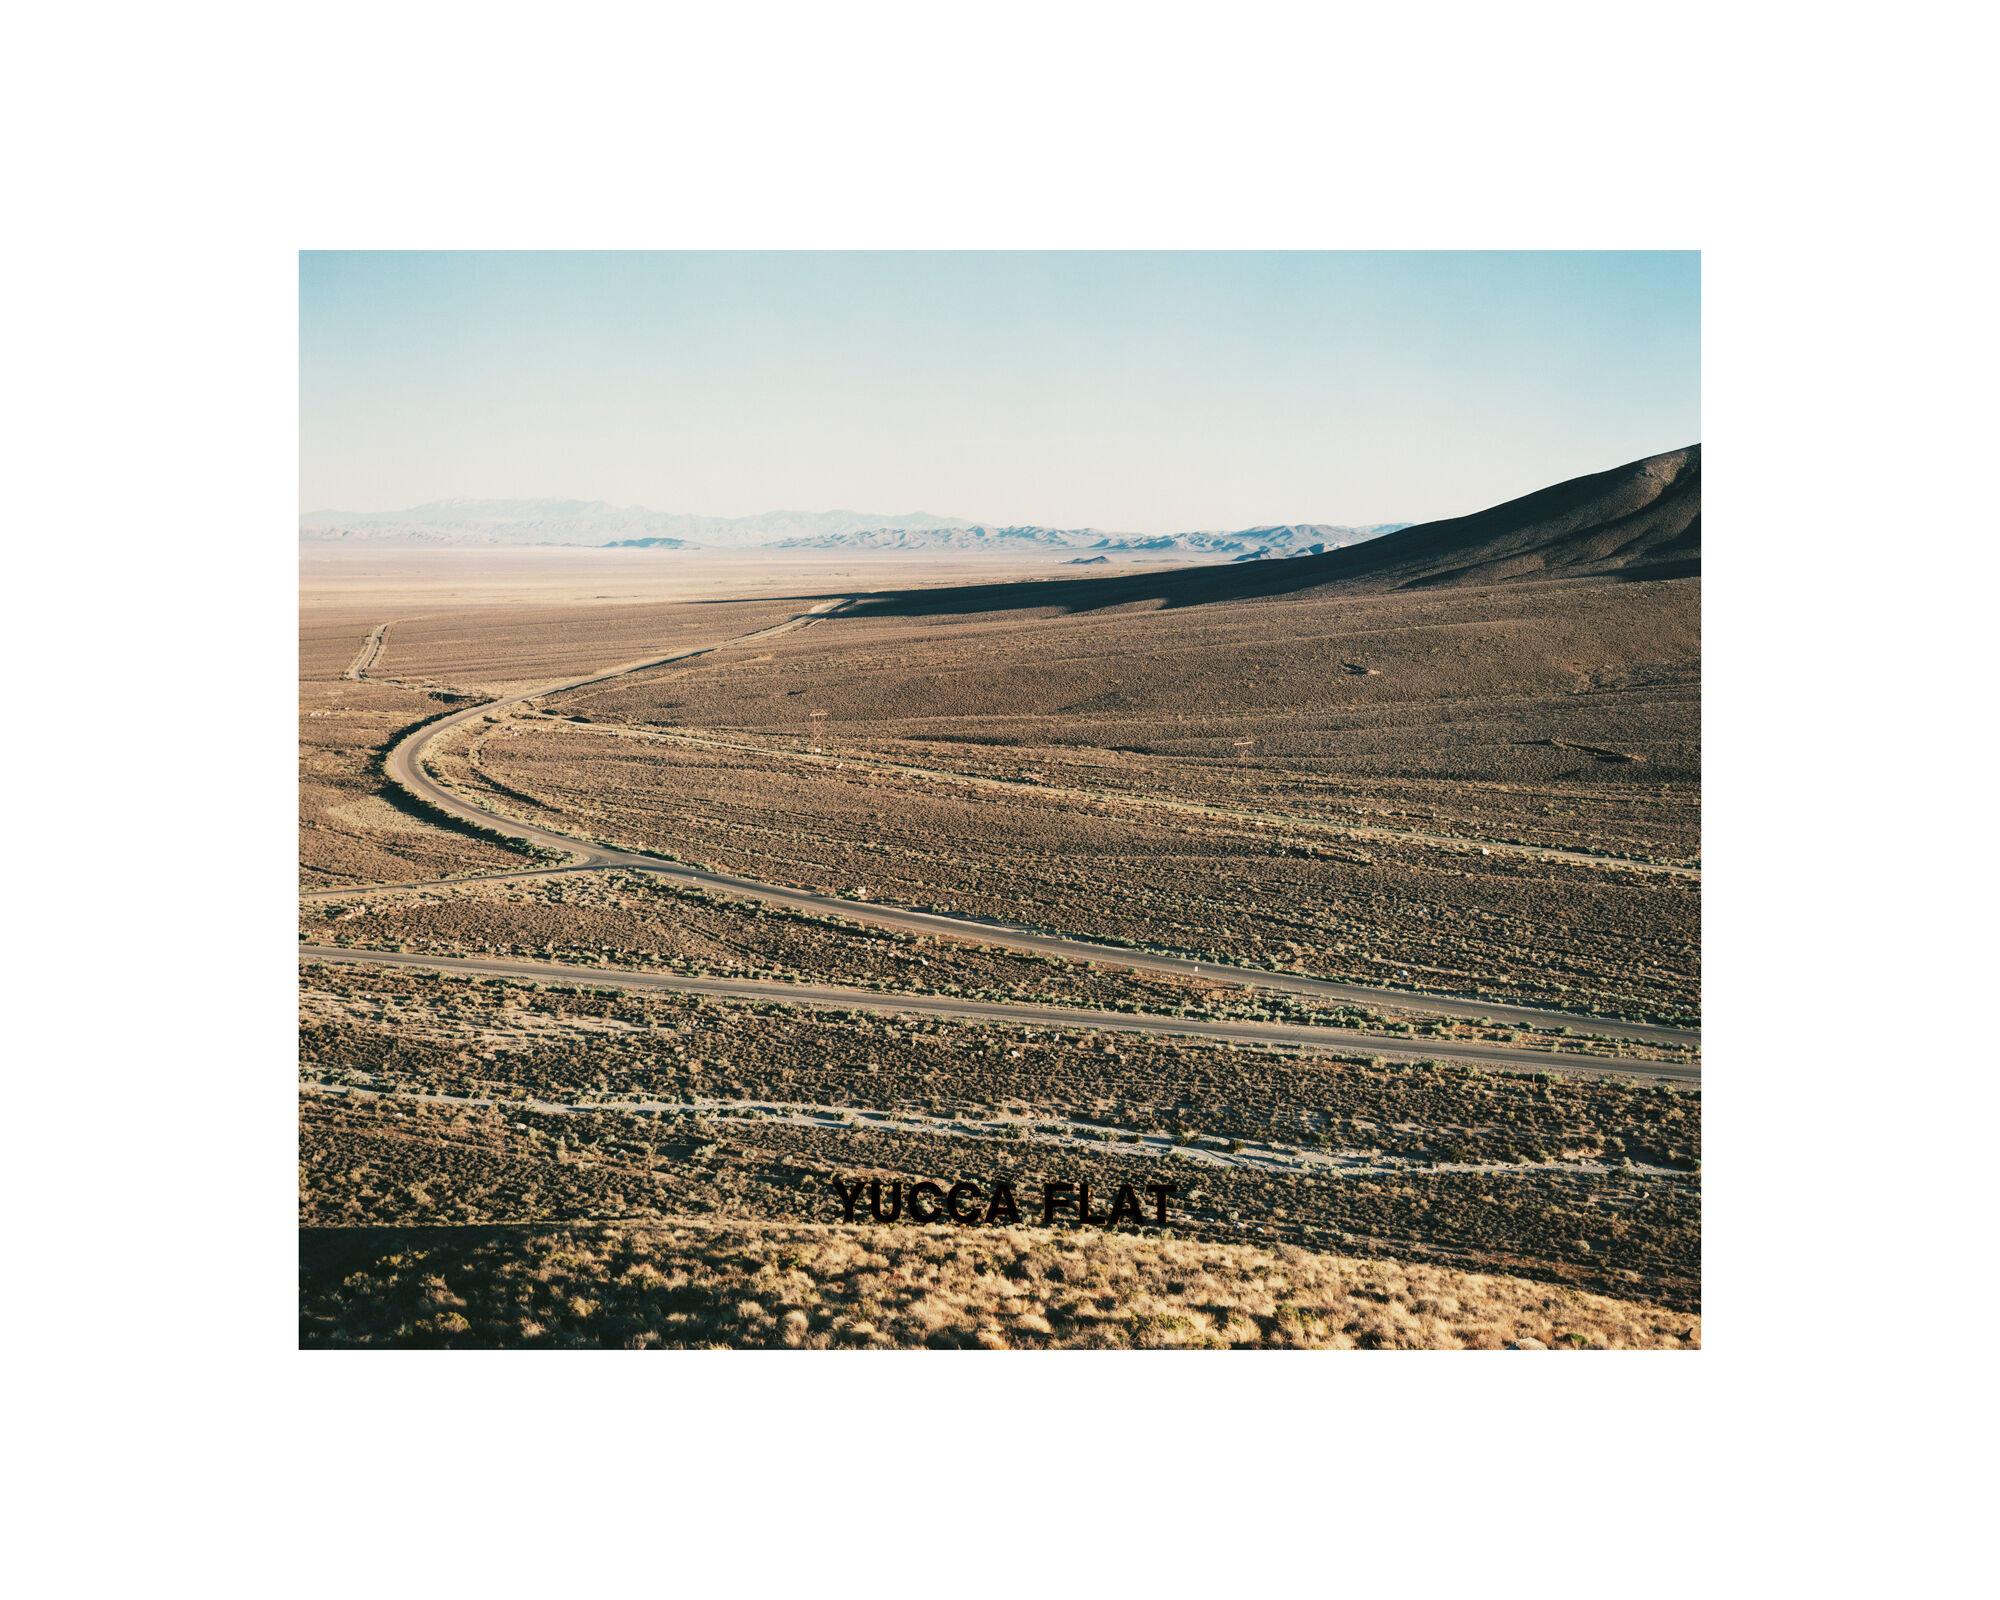 Yucca Flat